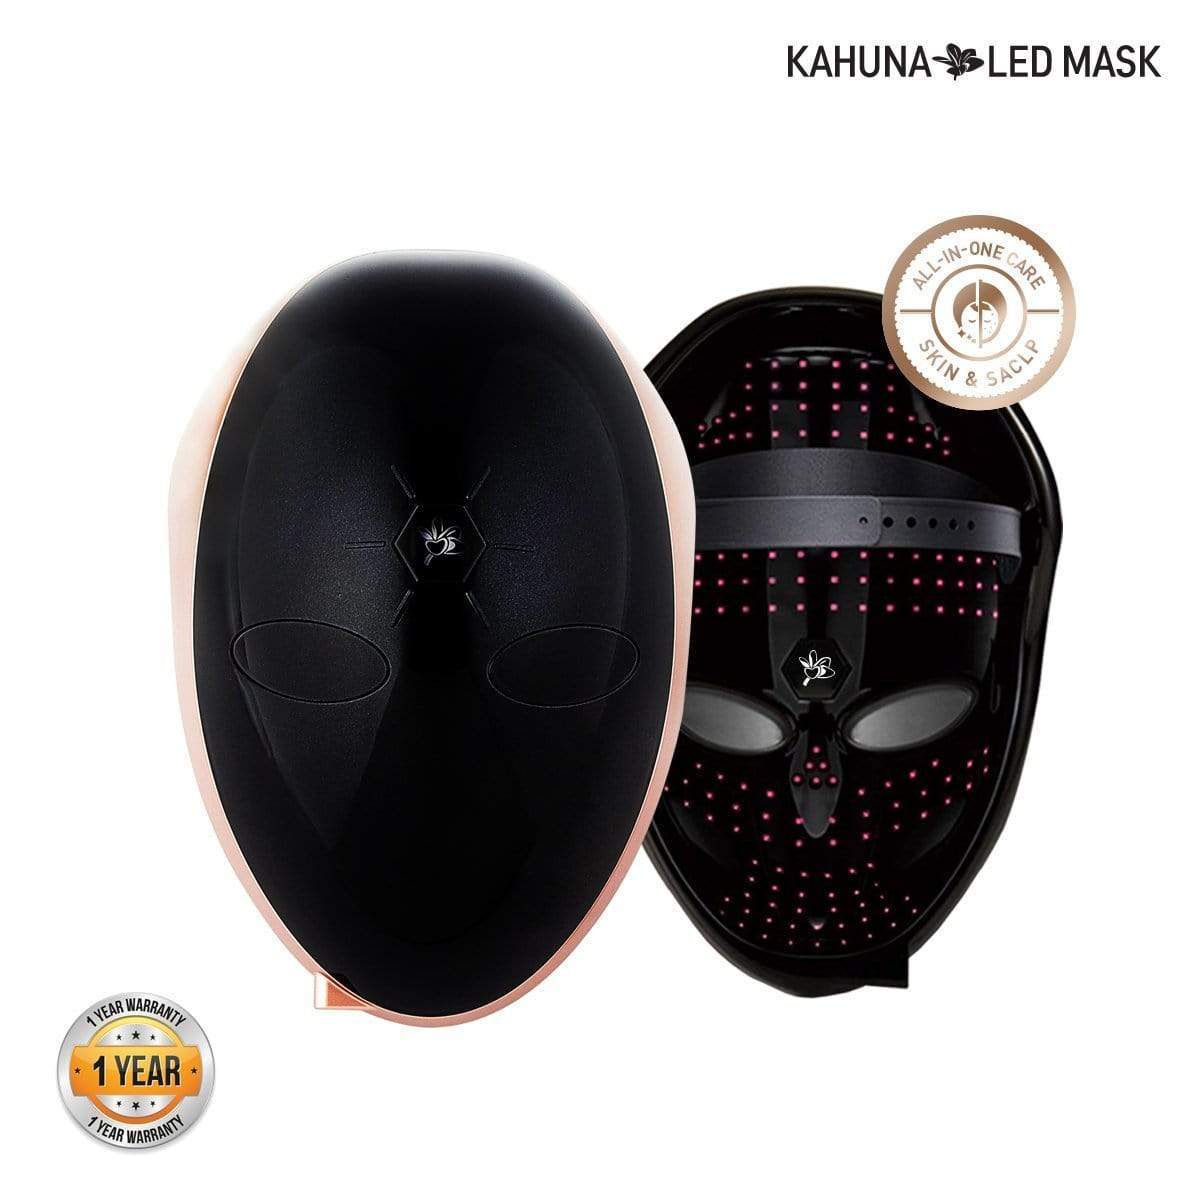 KahunaLED MASKKahuna Premium LED Mask V2Massage Chair Heaven